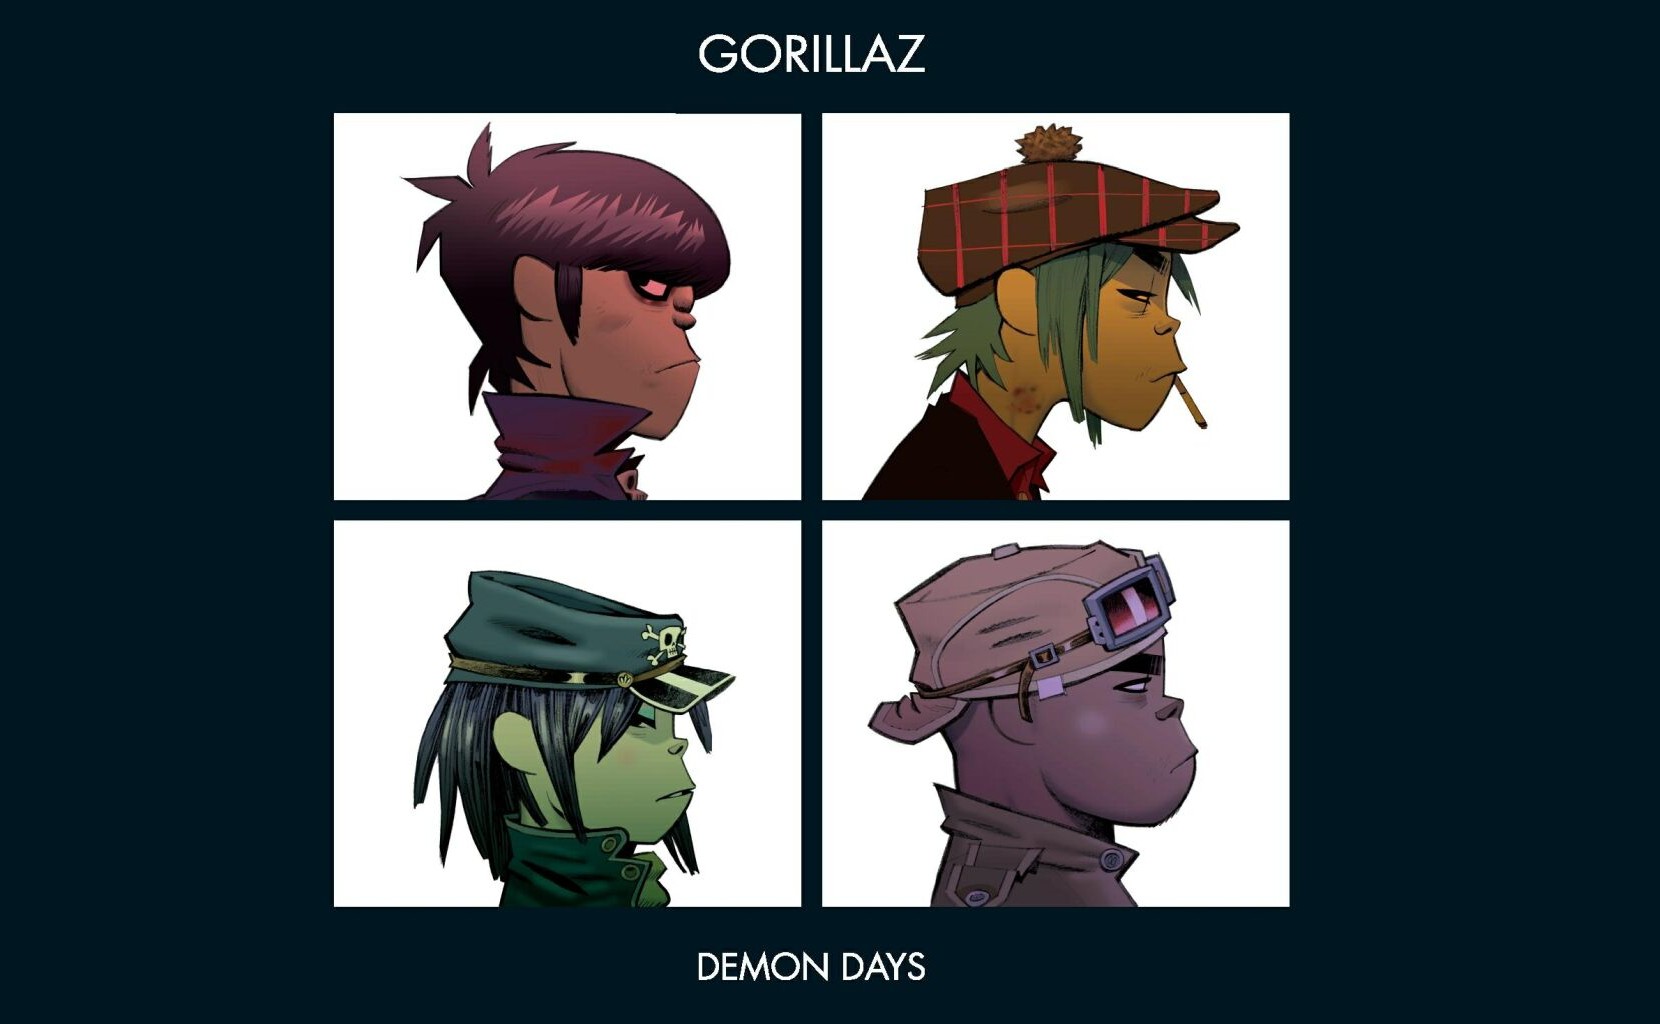 Gorillaz, Music, Album covers, Demon days Wallpaper